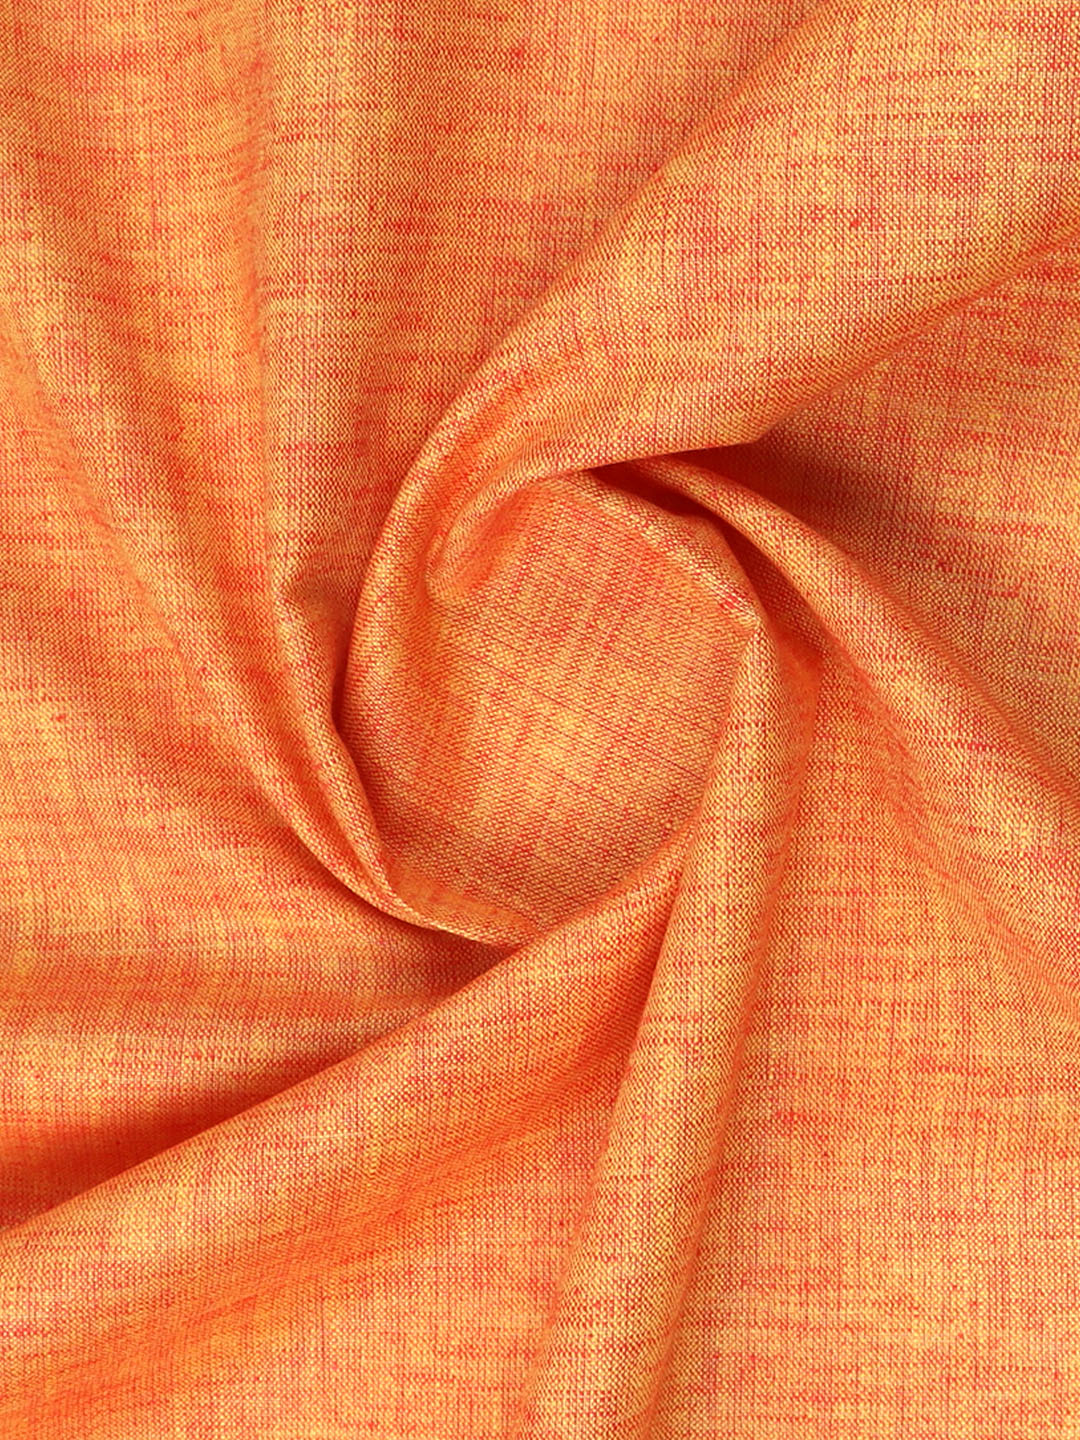 Cotton Blend Bronze Orange Colour Kurtha Fabric Lampus - APC1106-63